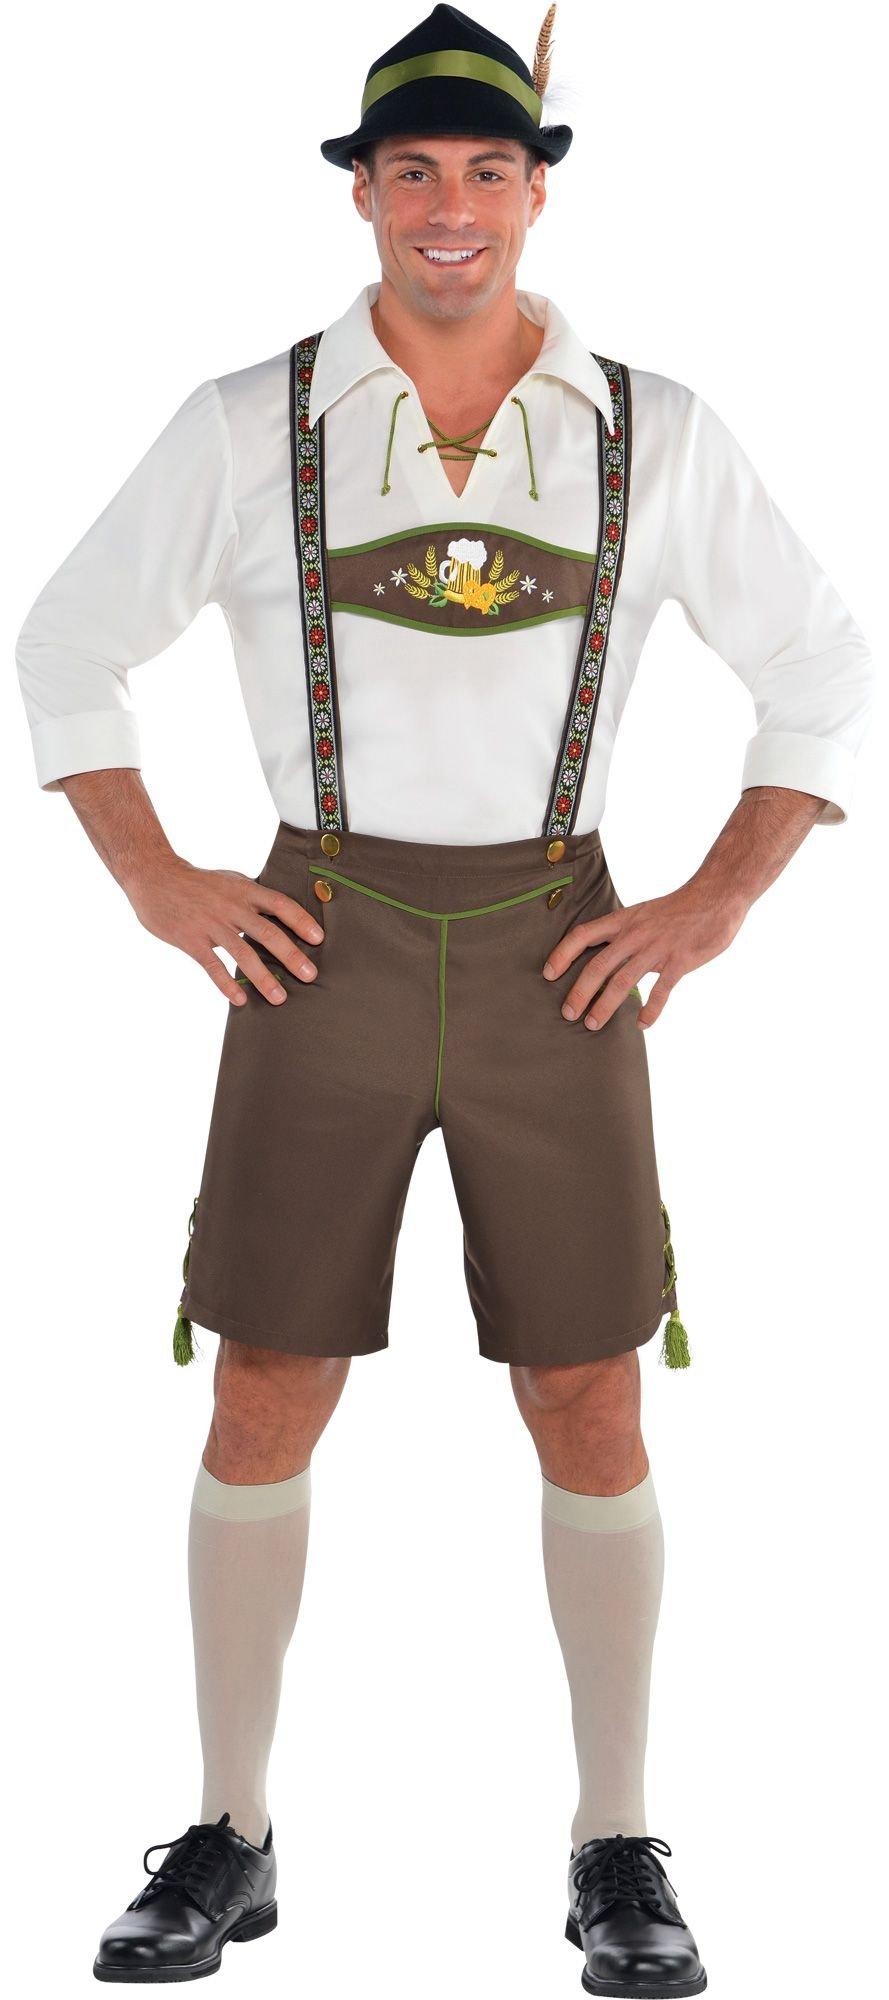 Real Men Wear Lederhosen German Mens T-shirt Oktoberfest Beer Tee